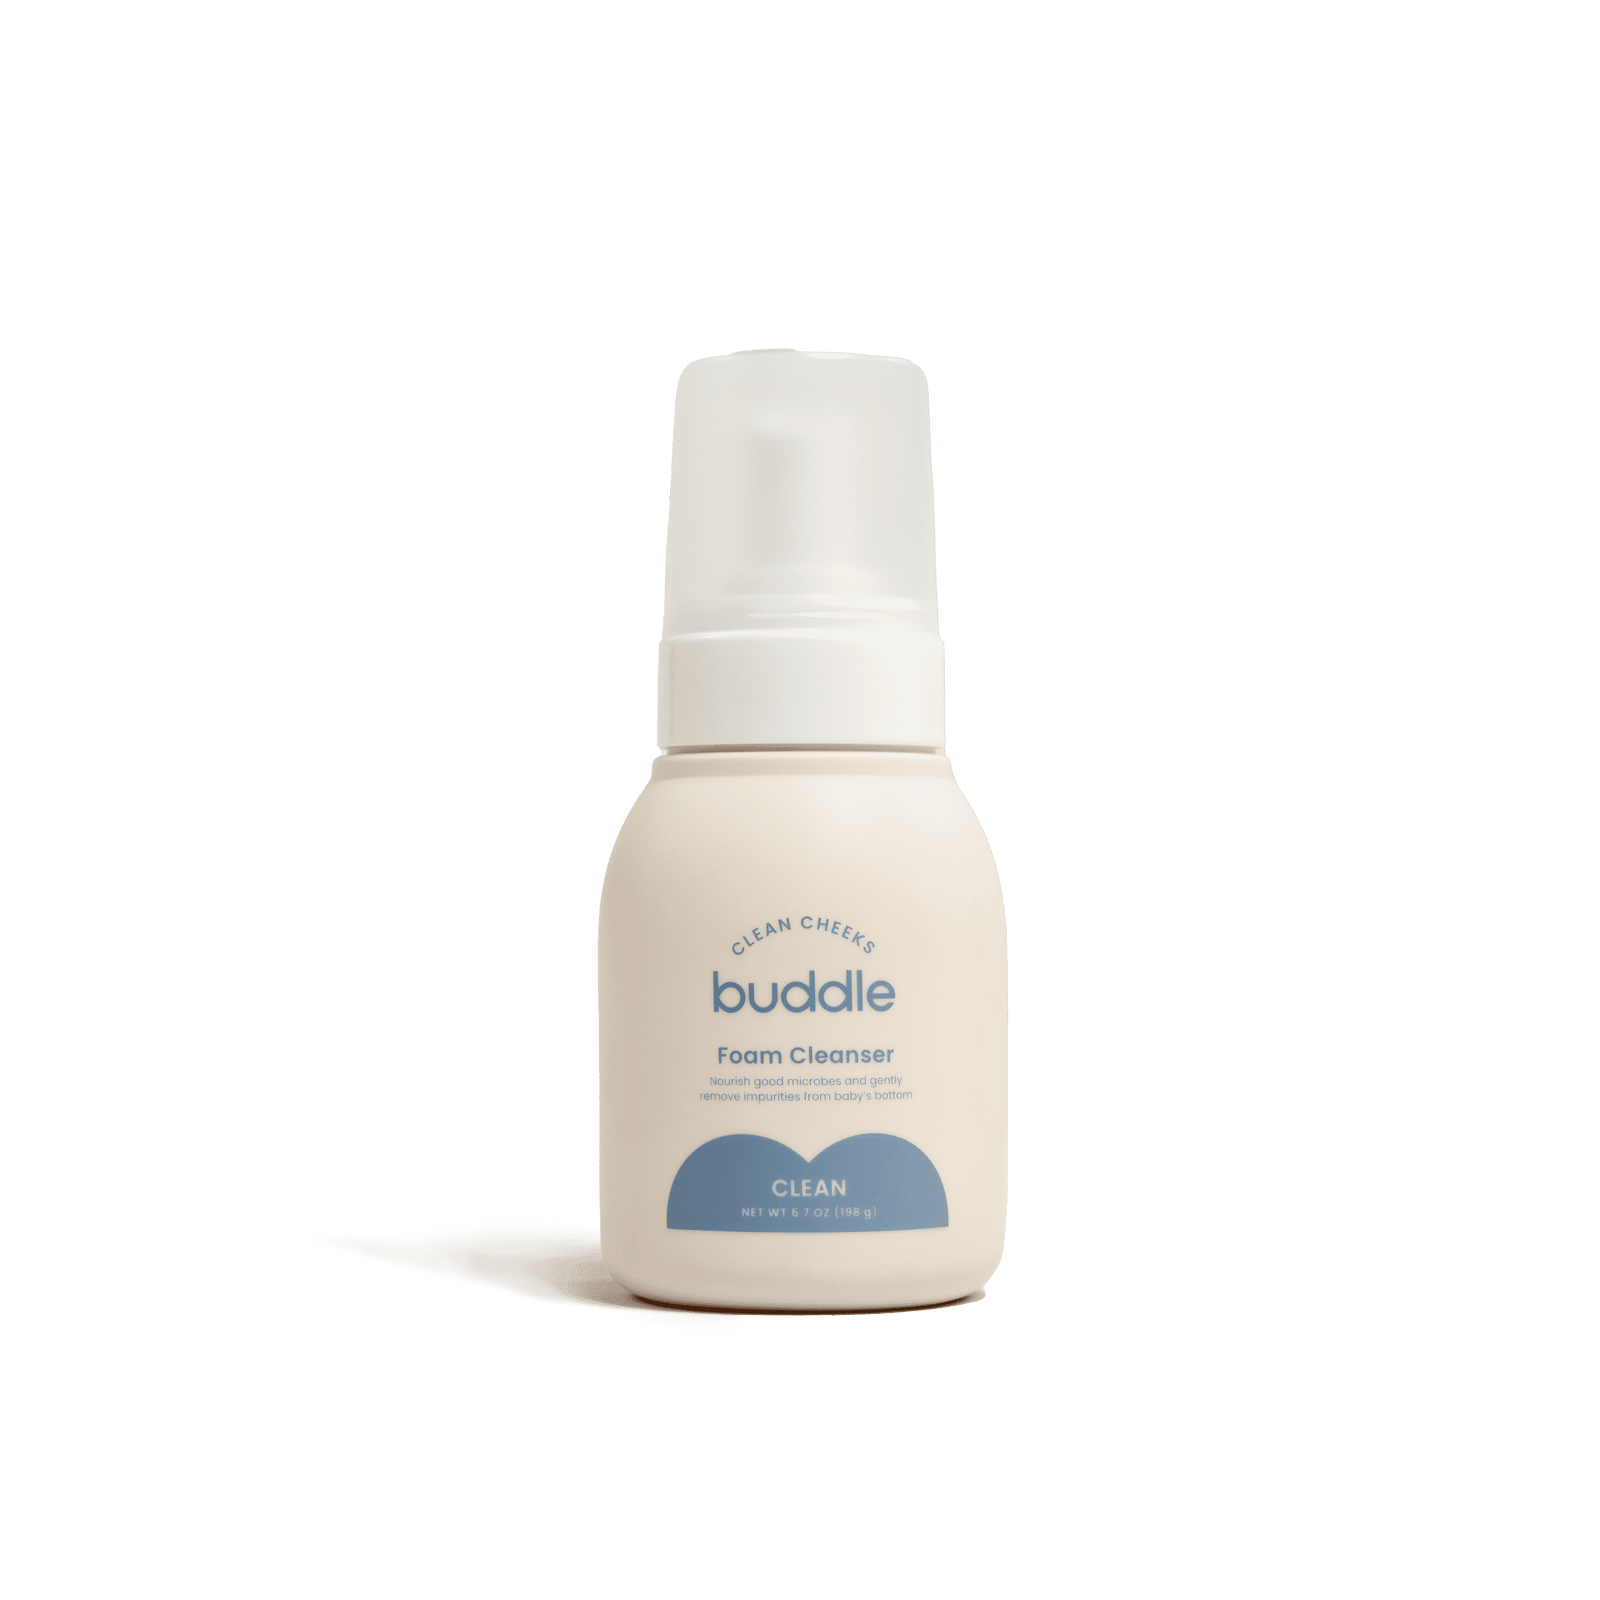 Buddle Clean Cheeks